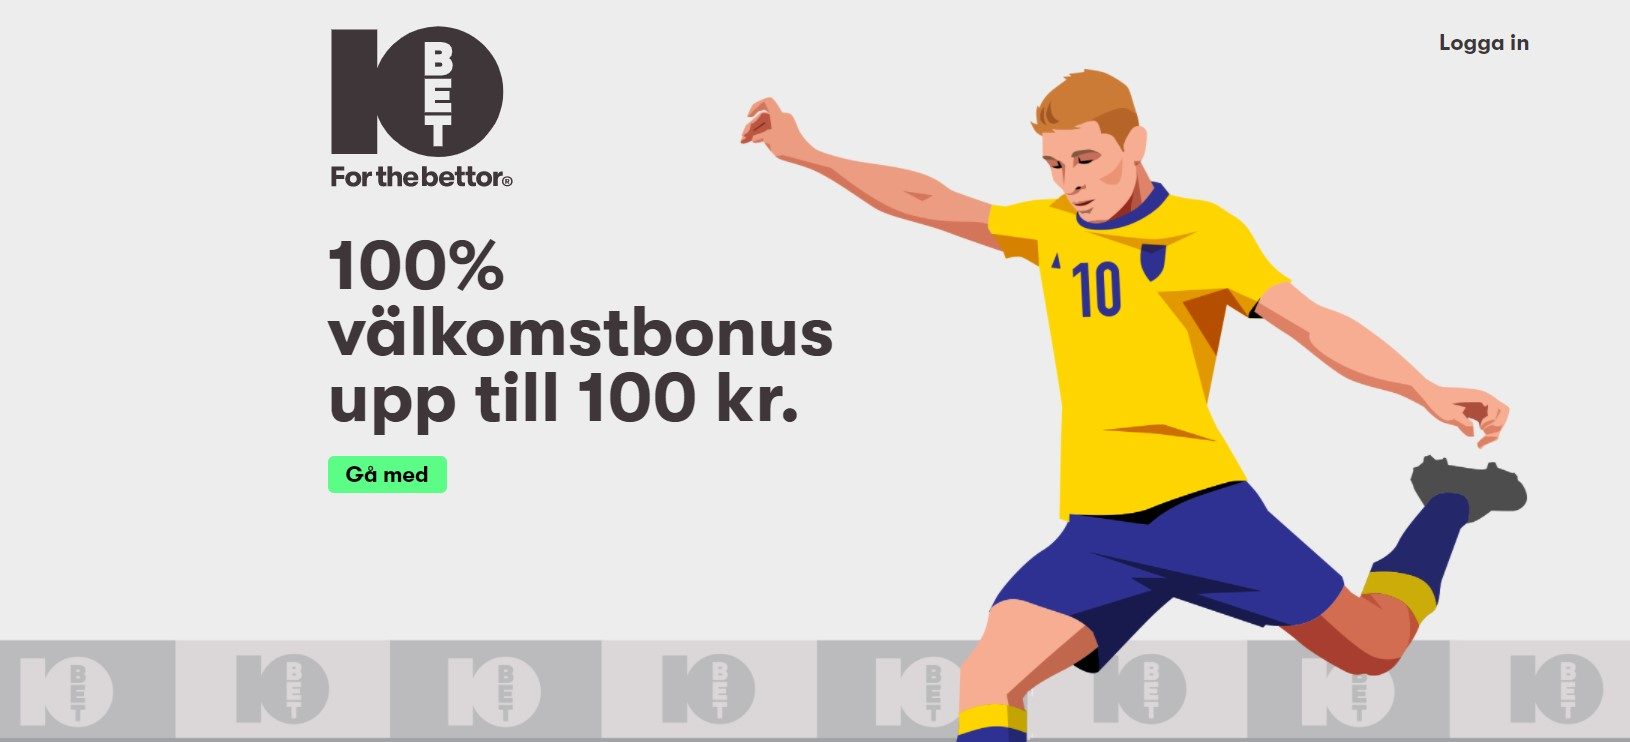 10Bet Sverige – Odds, bonus & recension